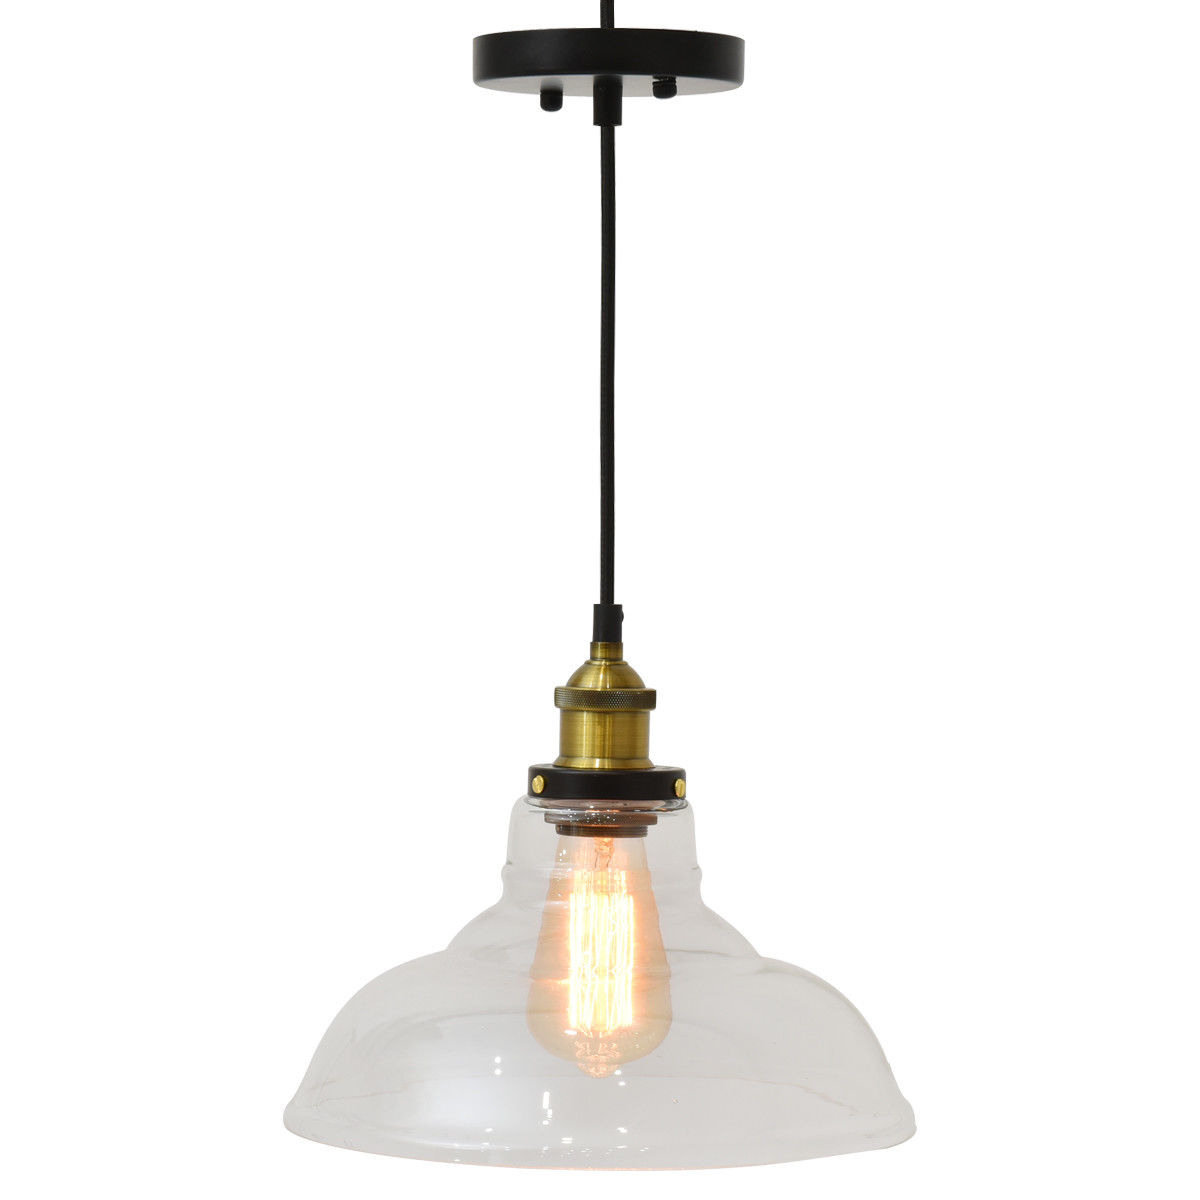 Vintage Style Industrial Edison Ceiling Pendant Glass Hanging Light 1-light Bulb